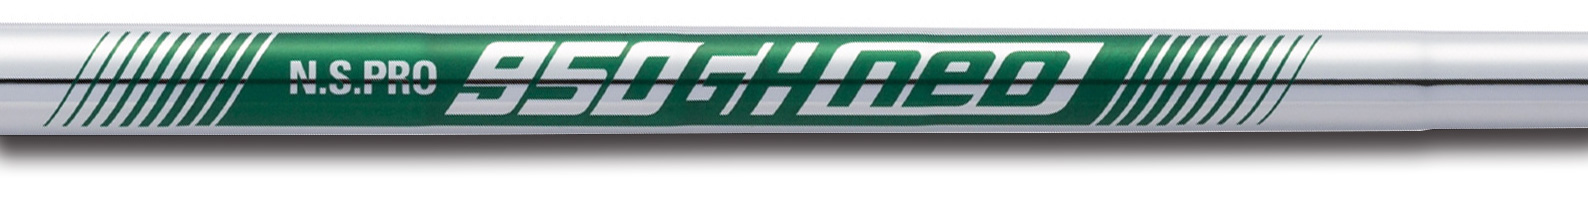 shaft-nspro-950gh